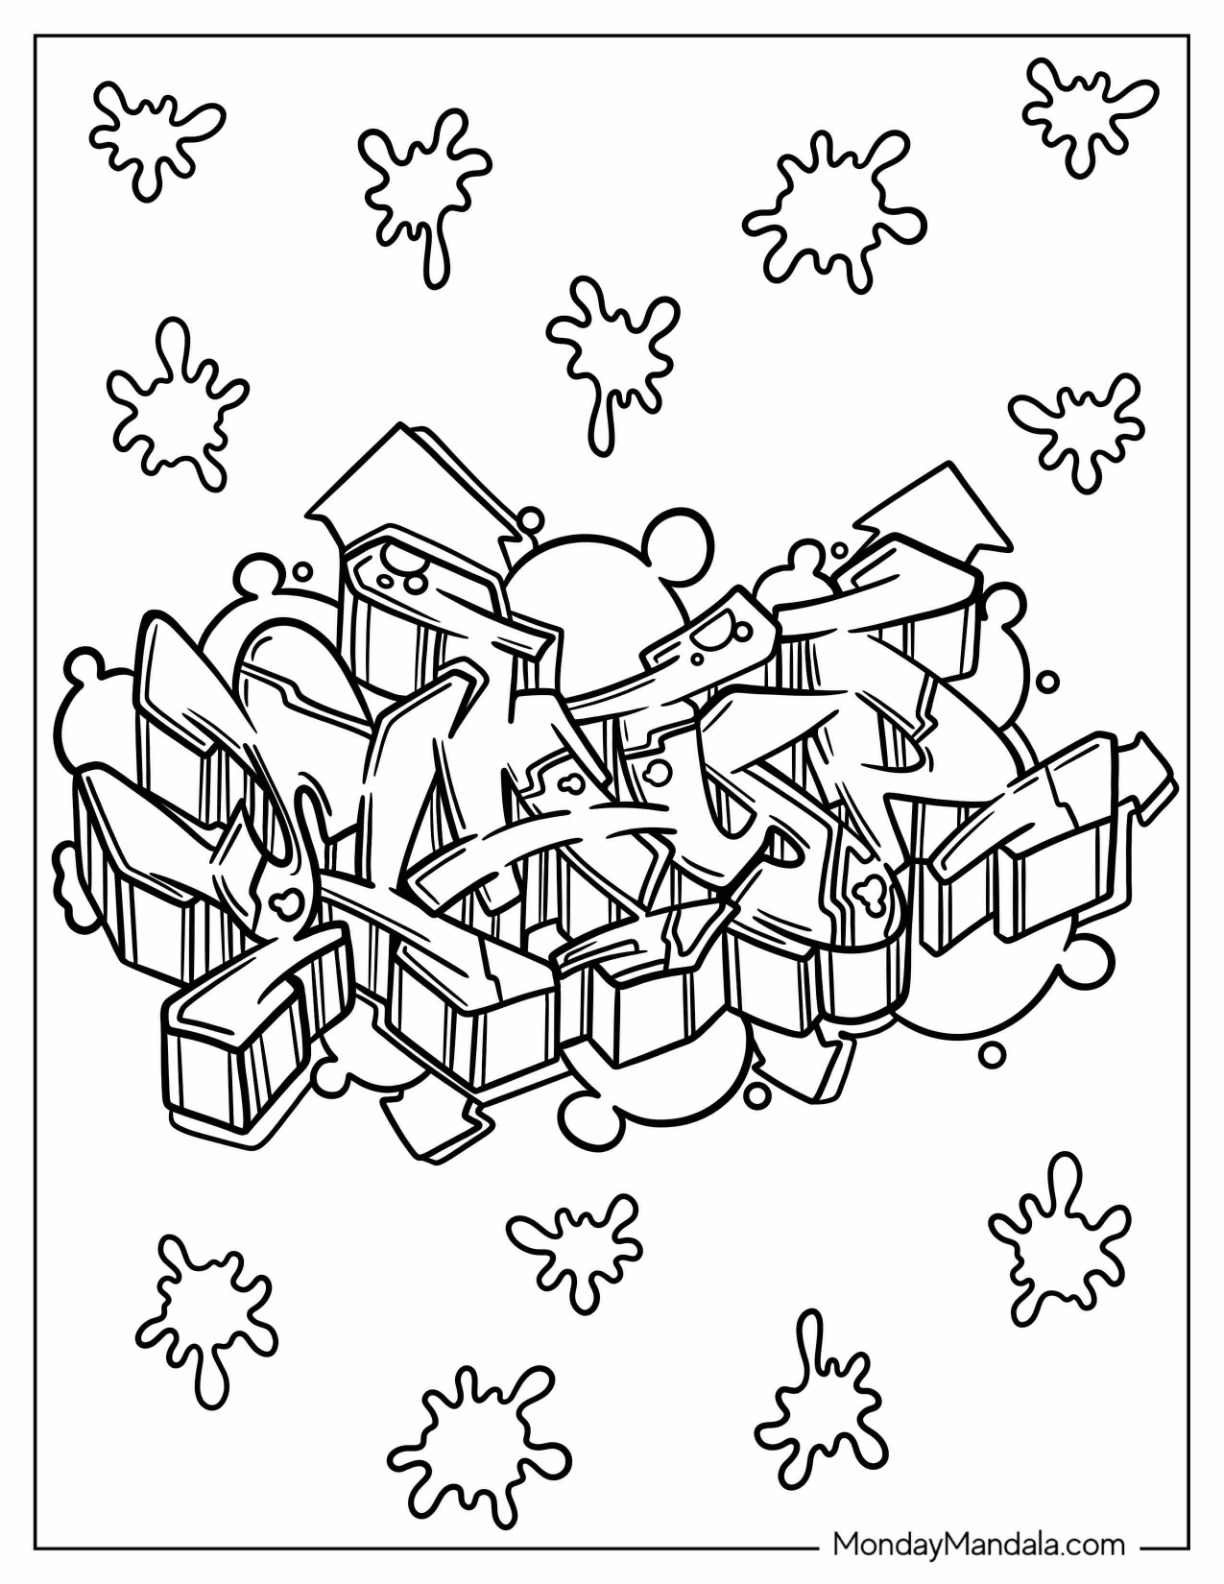 Graffiti coloring pages free pdf printables